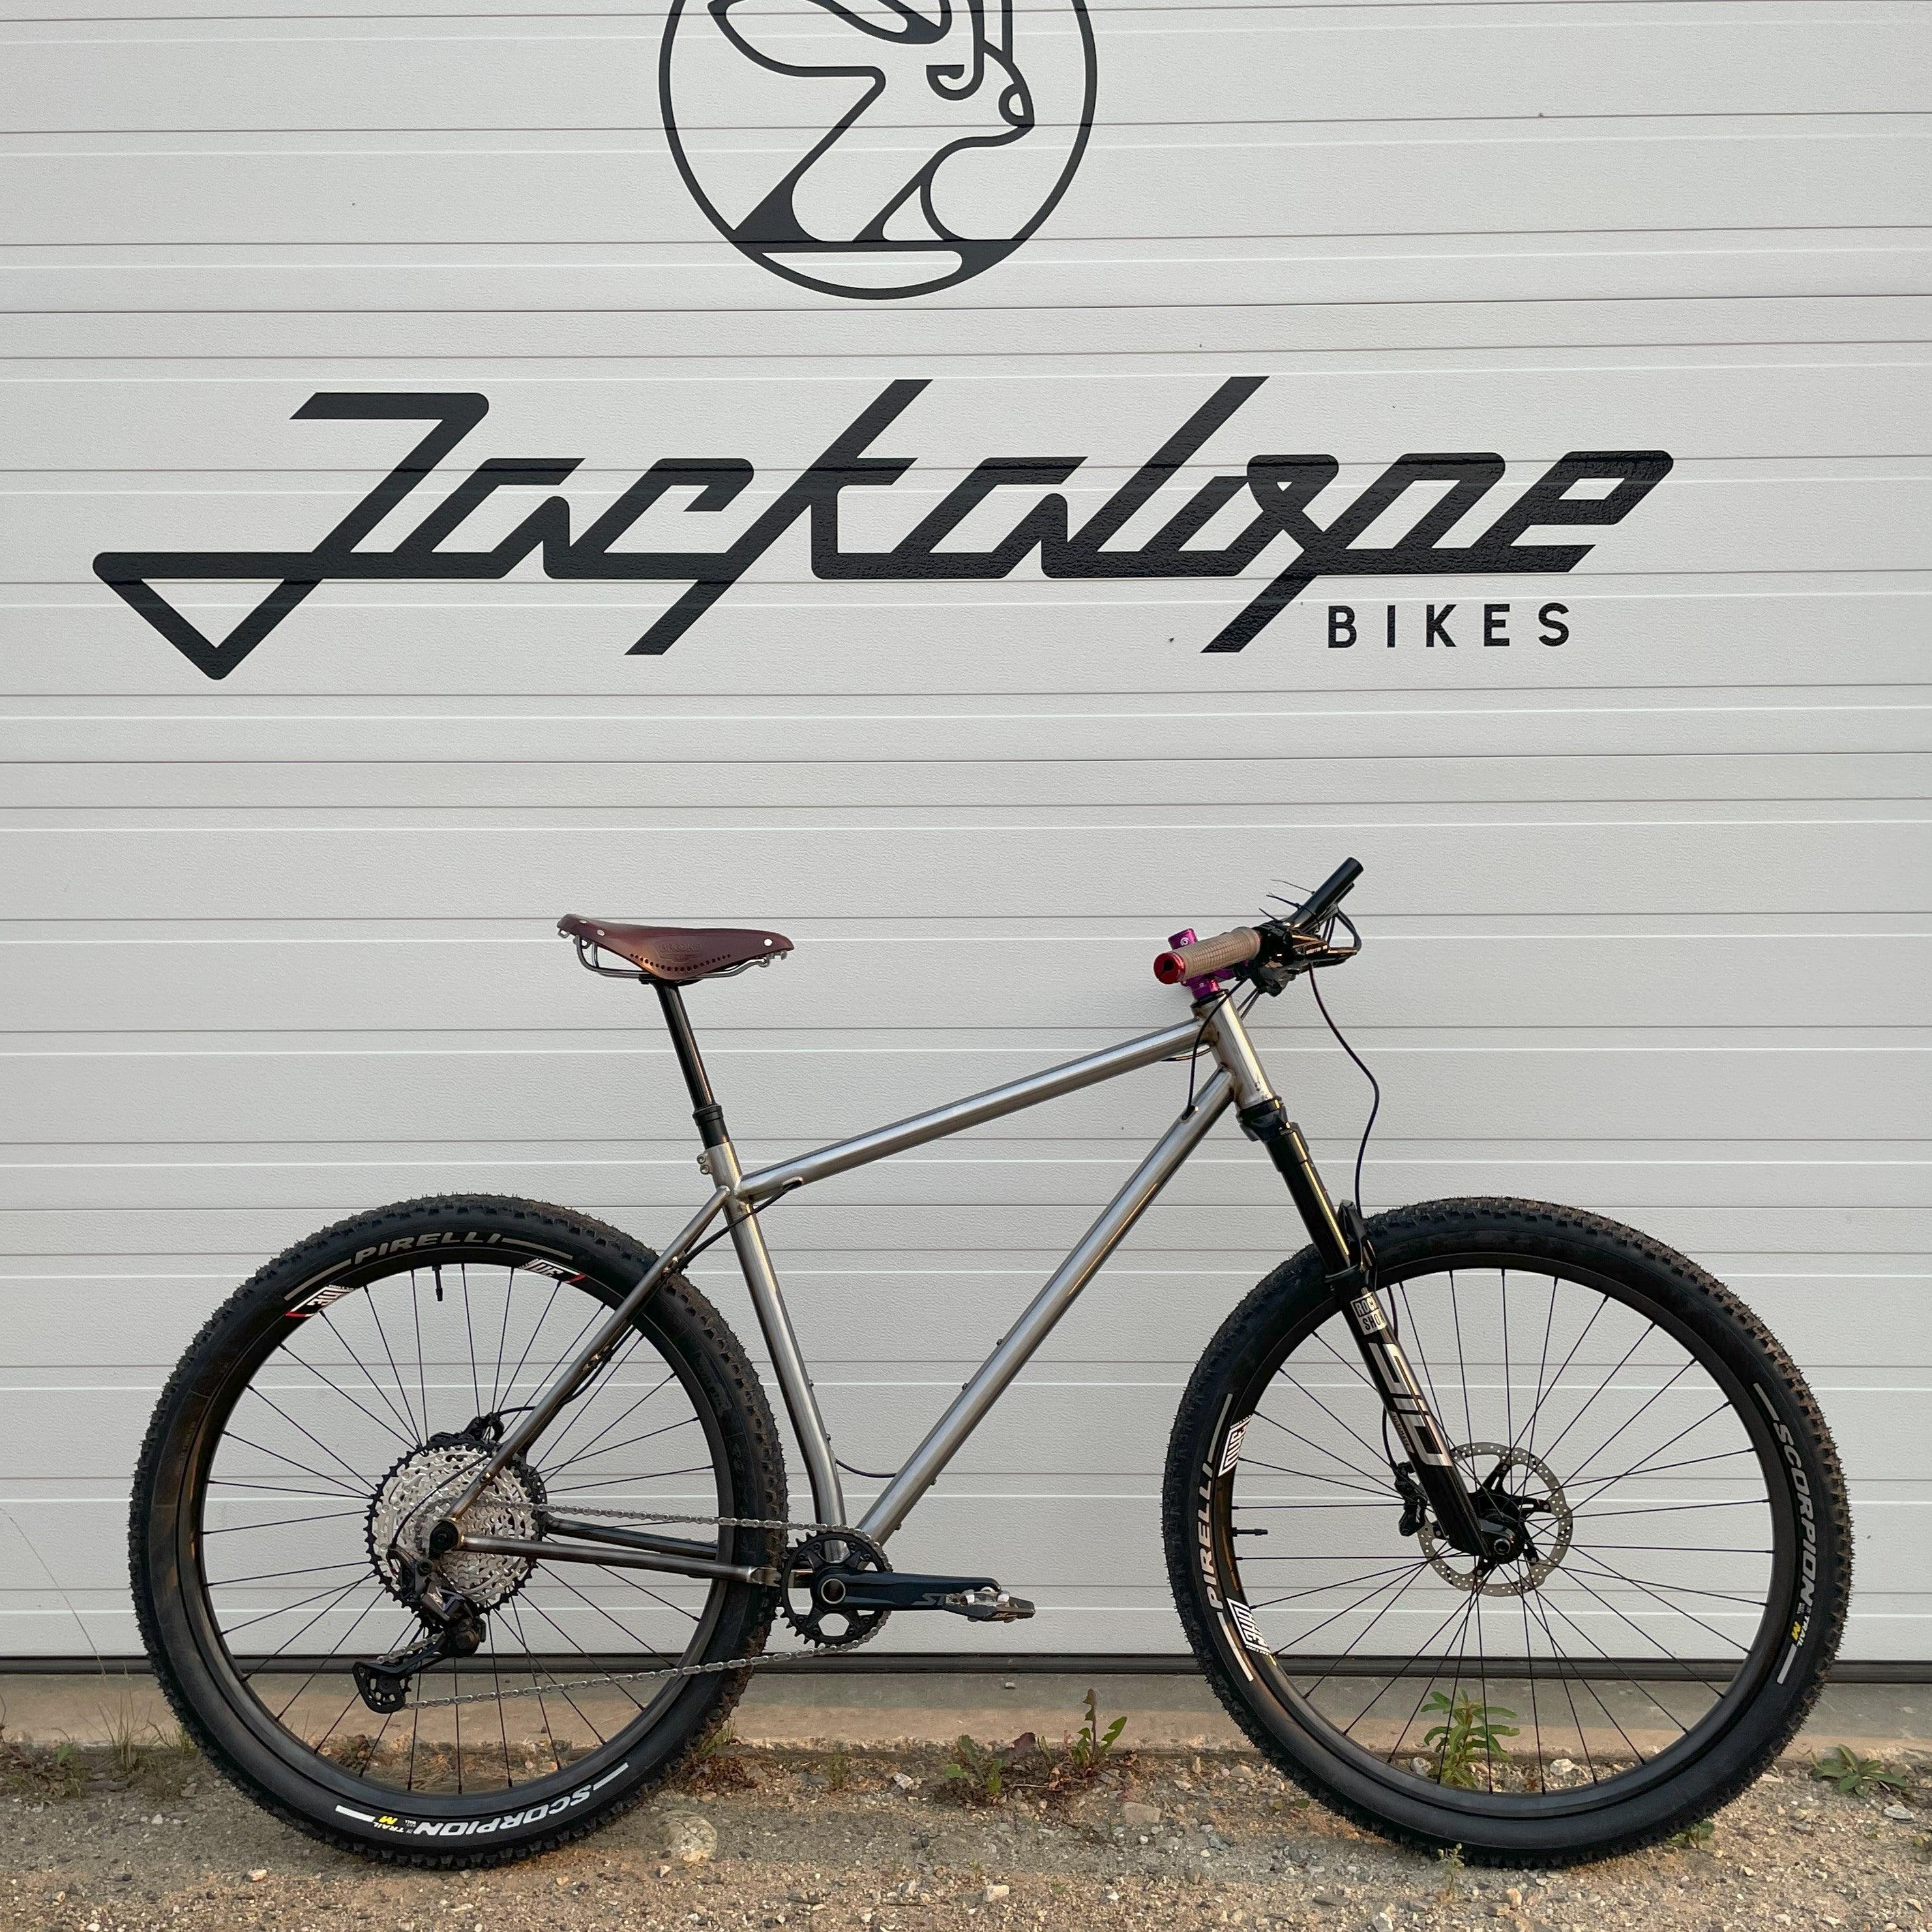 Big ShrEddy - Hardtail / Bike Packing / ADV - Jackalope Bikes